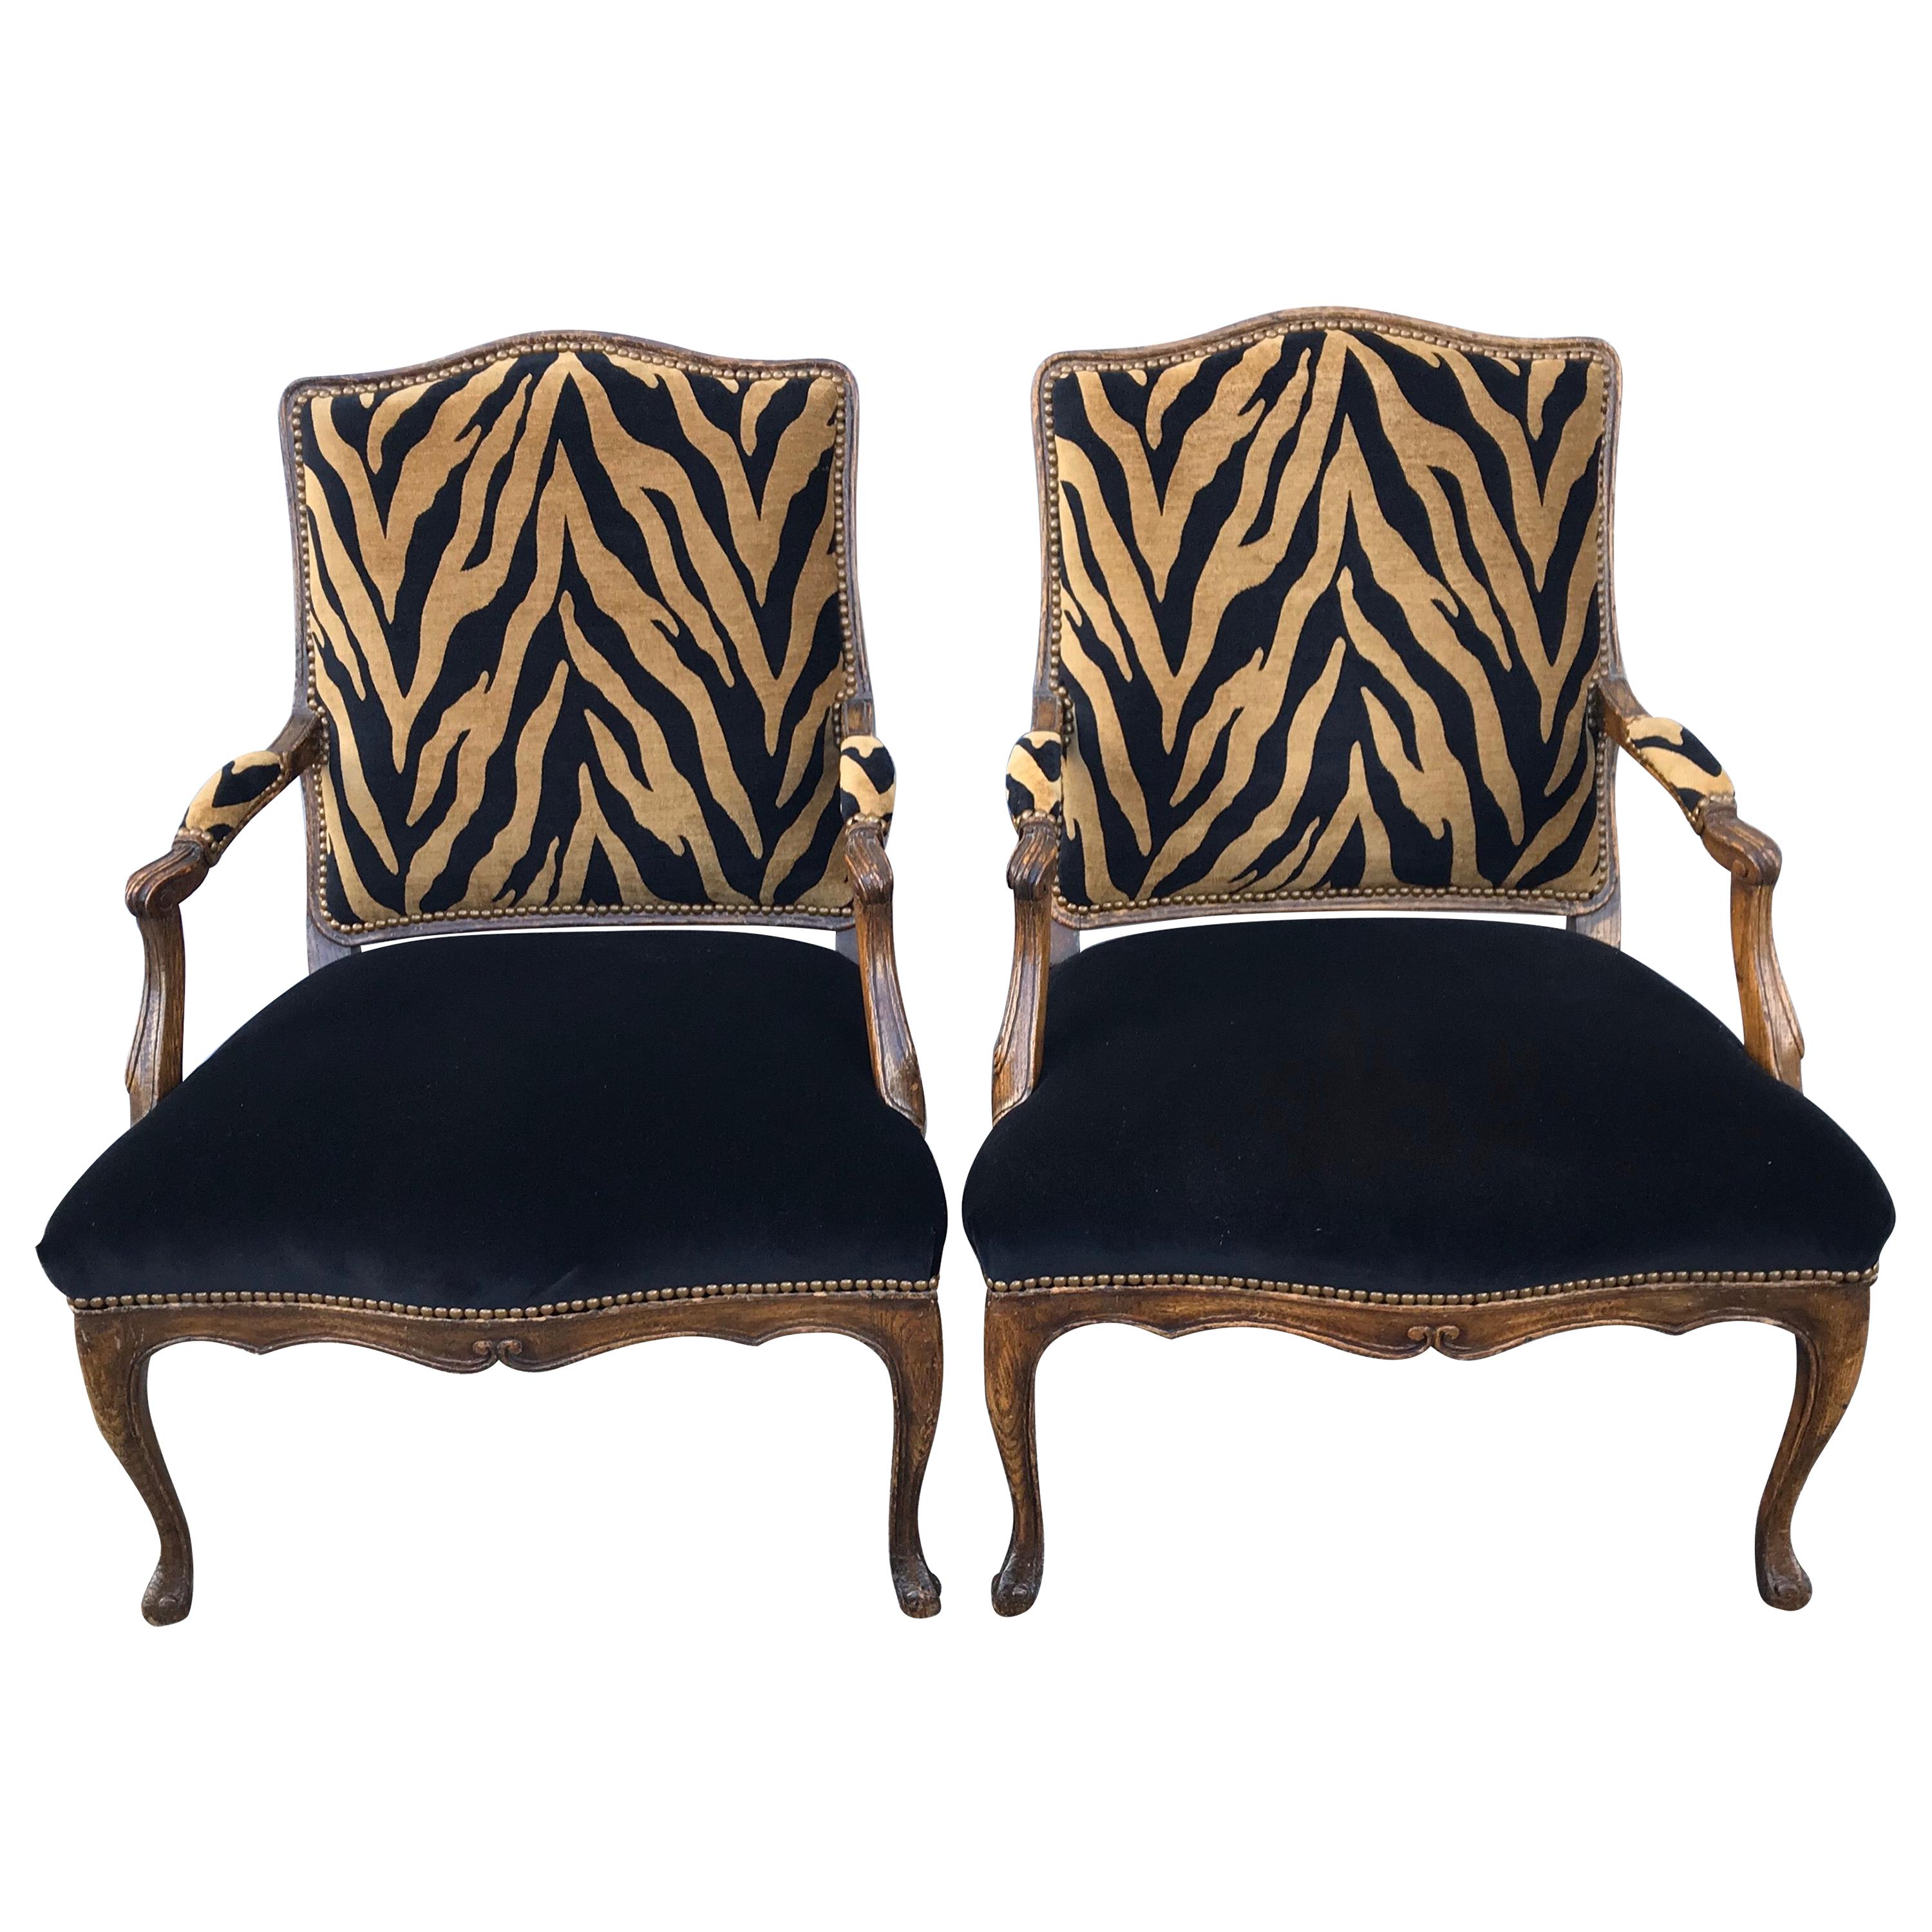 Pair of Hollywood Regency Style Zebra Print Velvet Club Chairs, Oak Frames